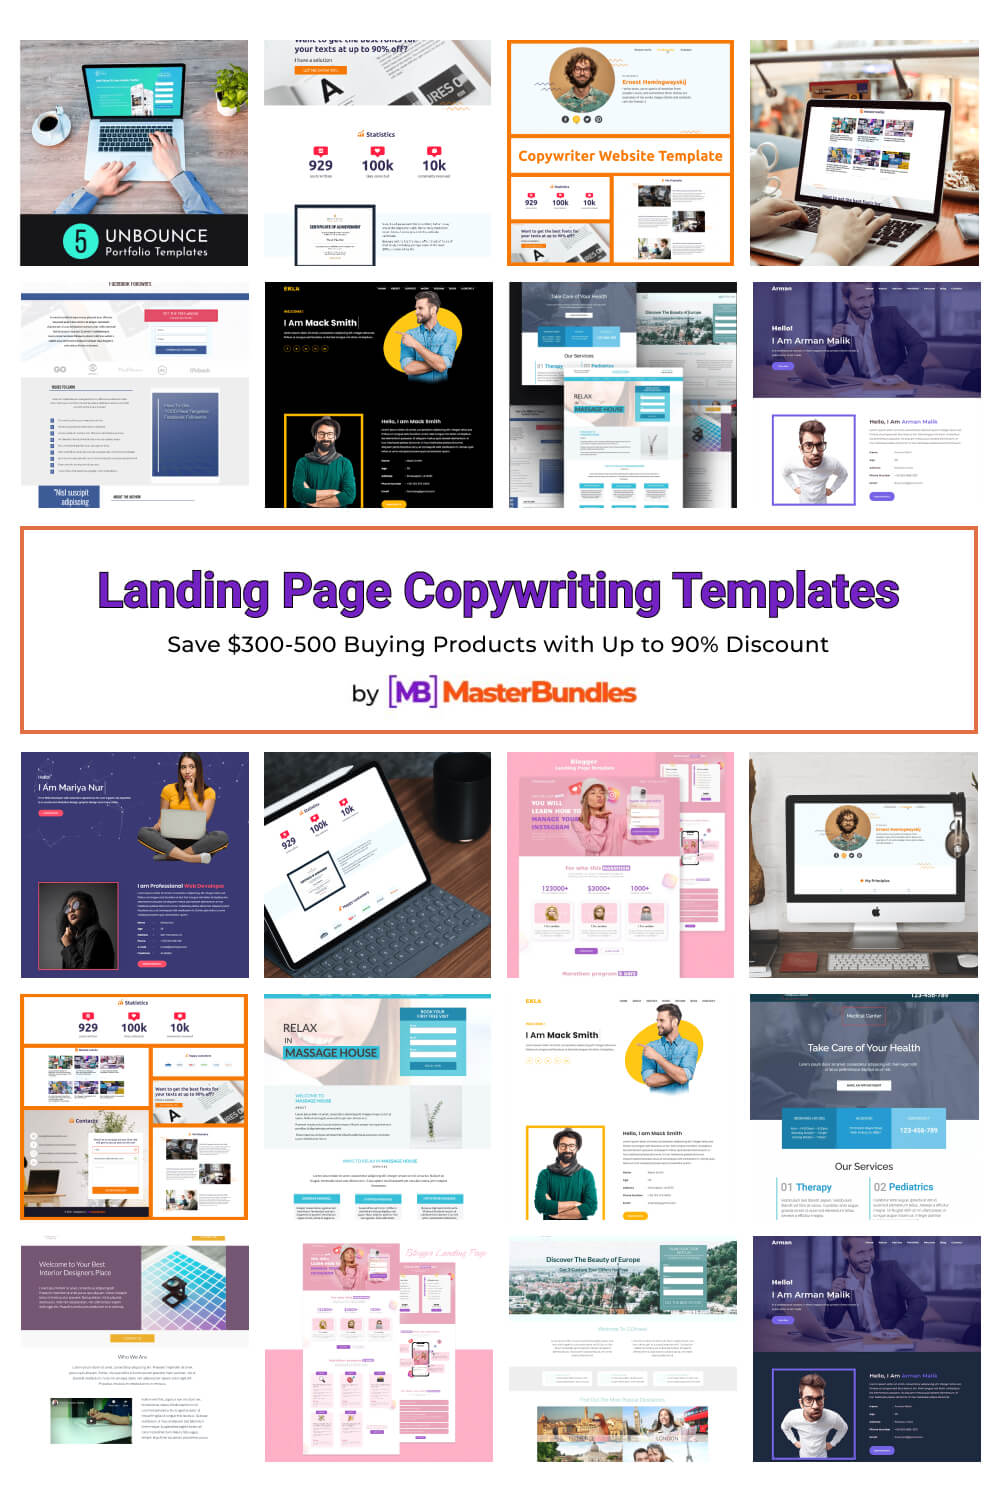 landing page copywriting templates pinterest image.